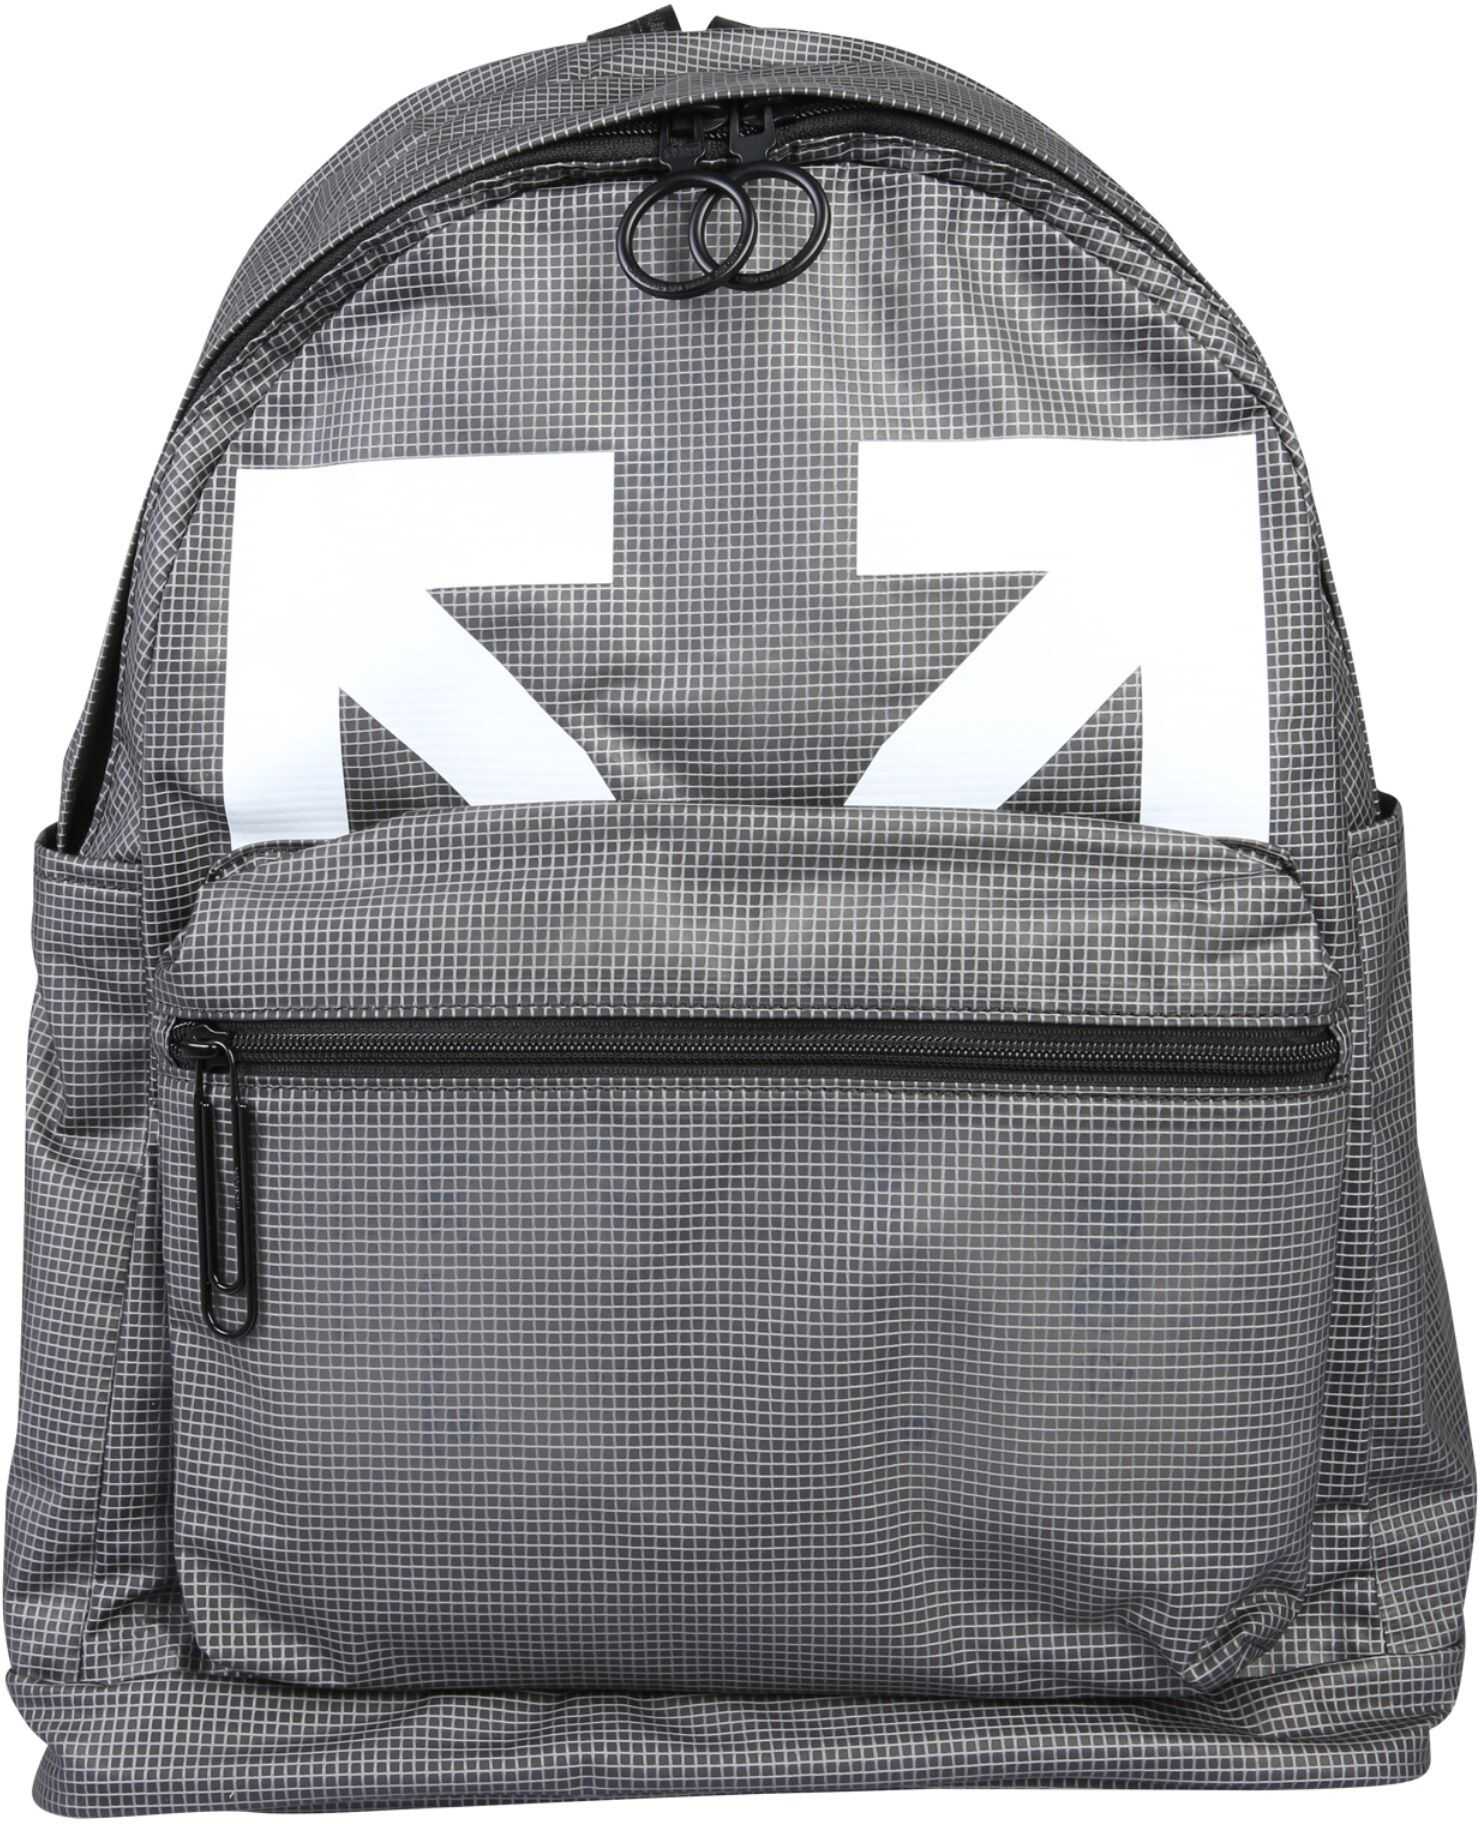 "Arrow" Backpack